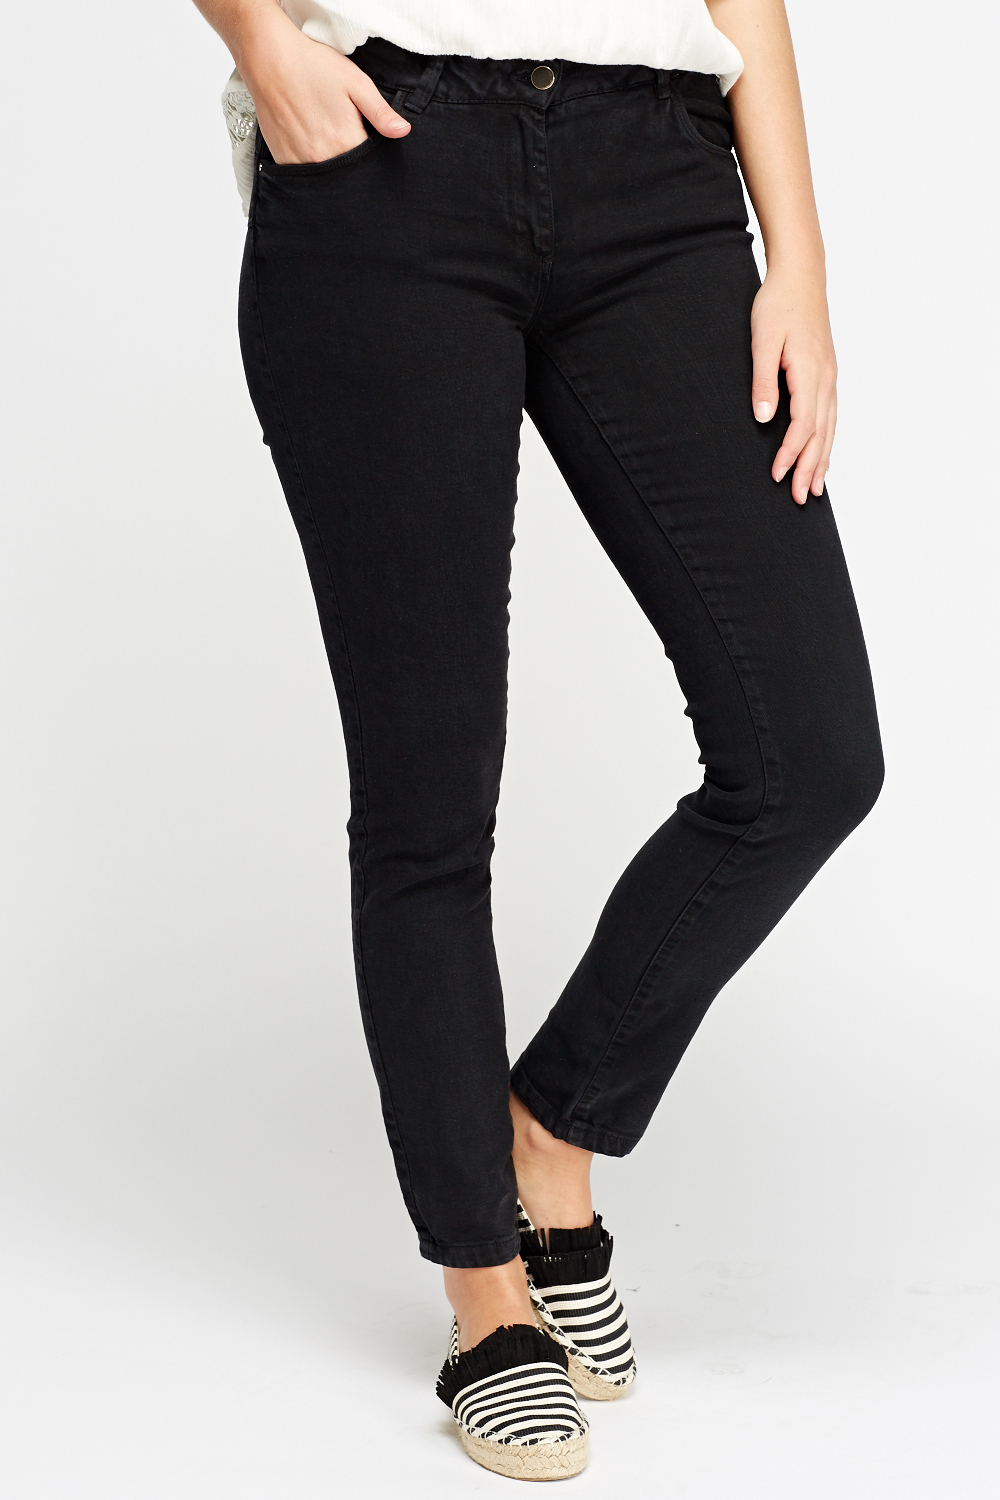 Slim Fit Regular Waist Jeans - Just $6